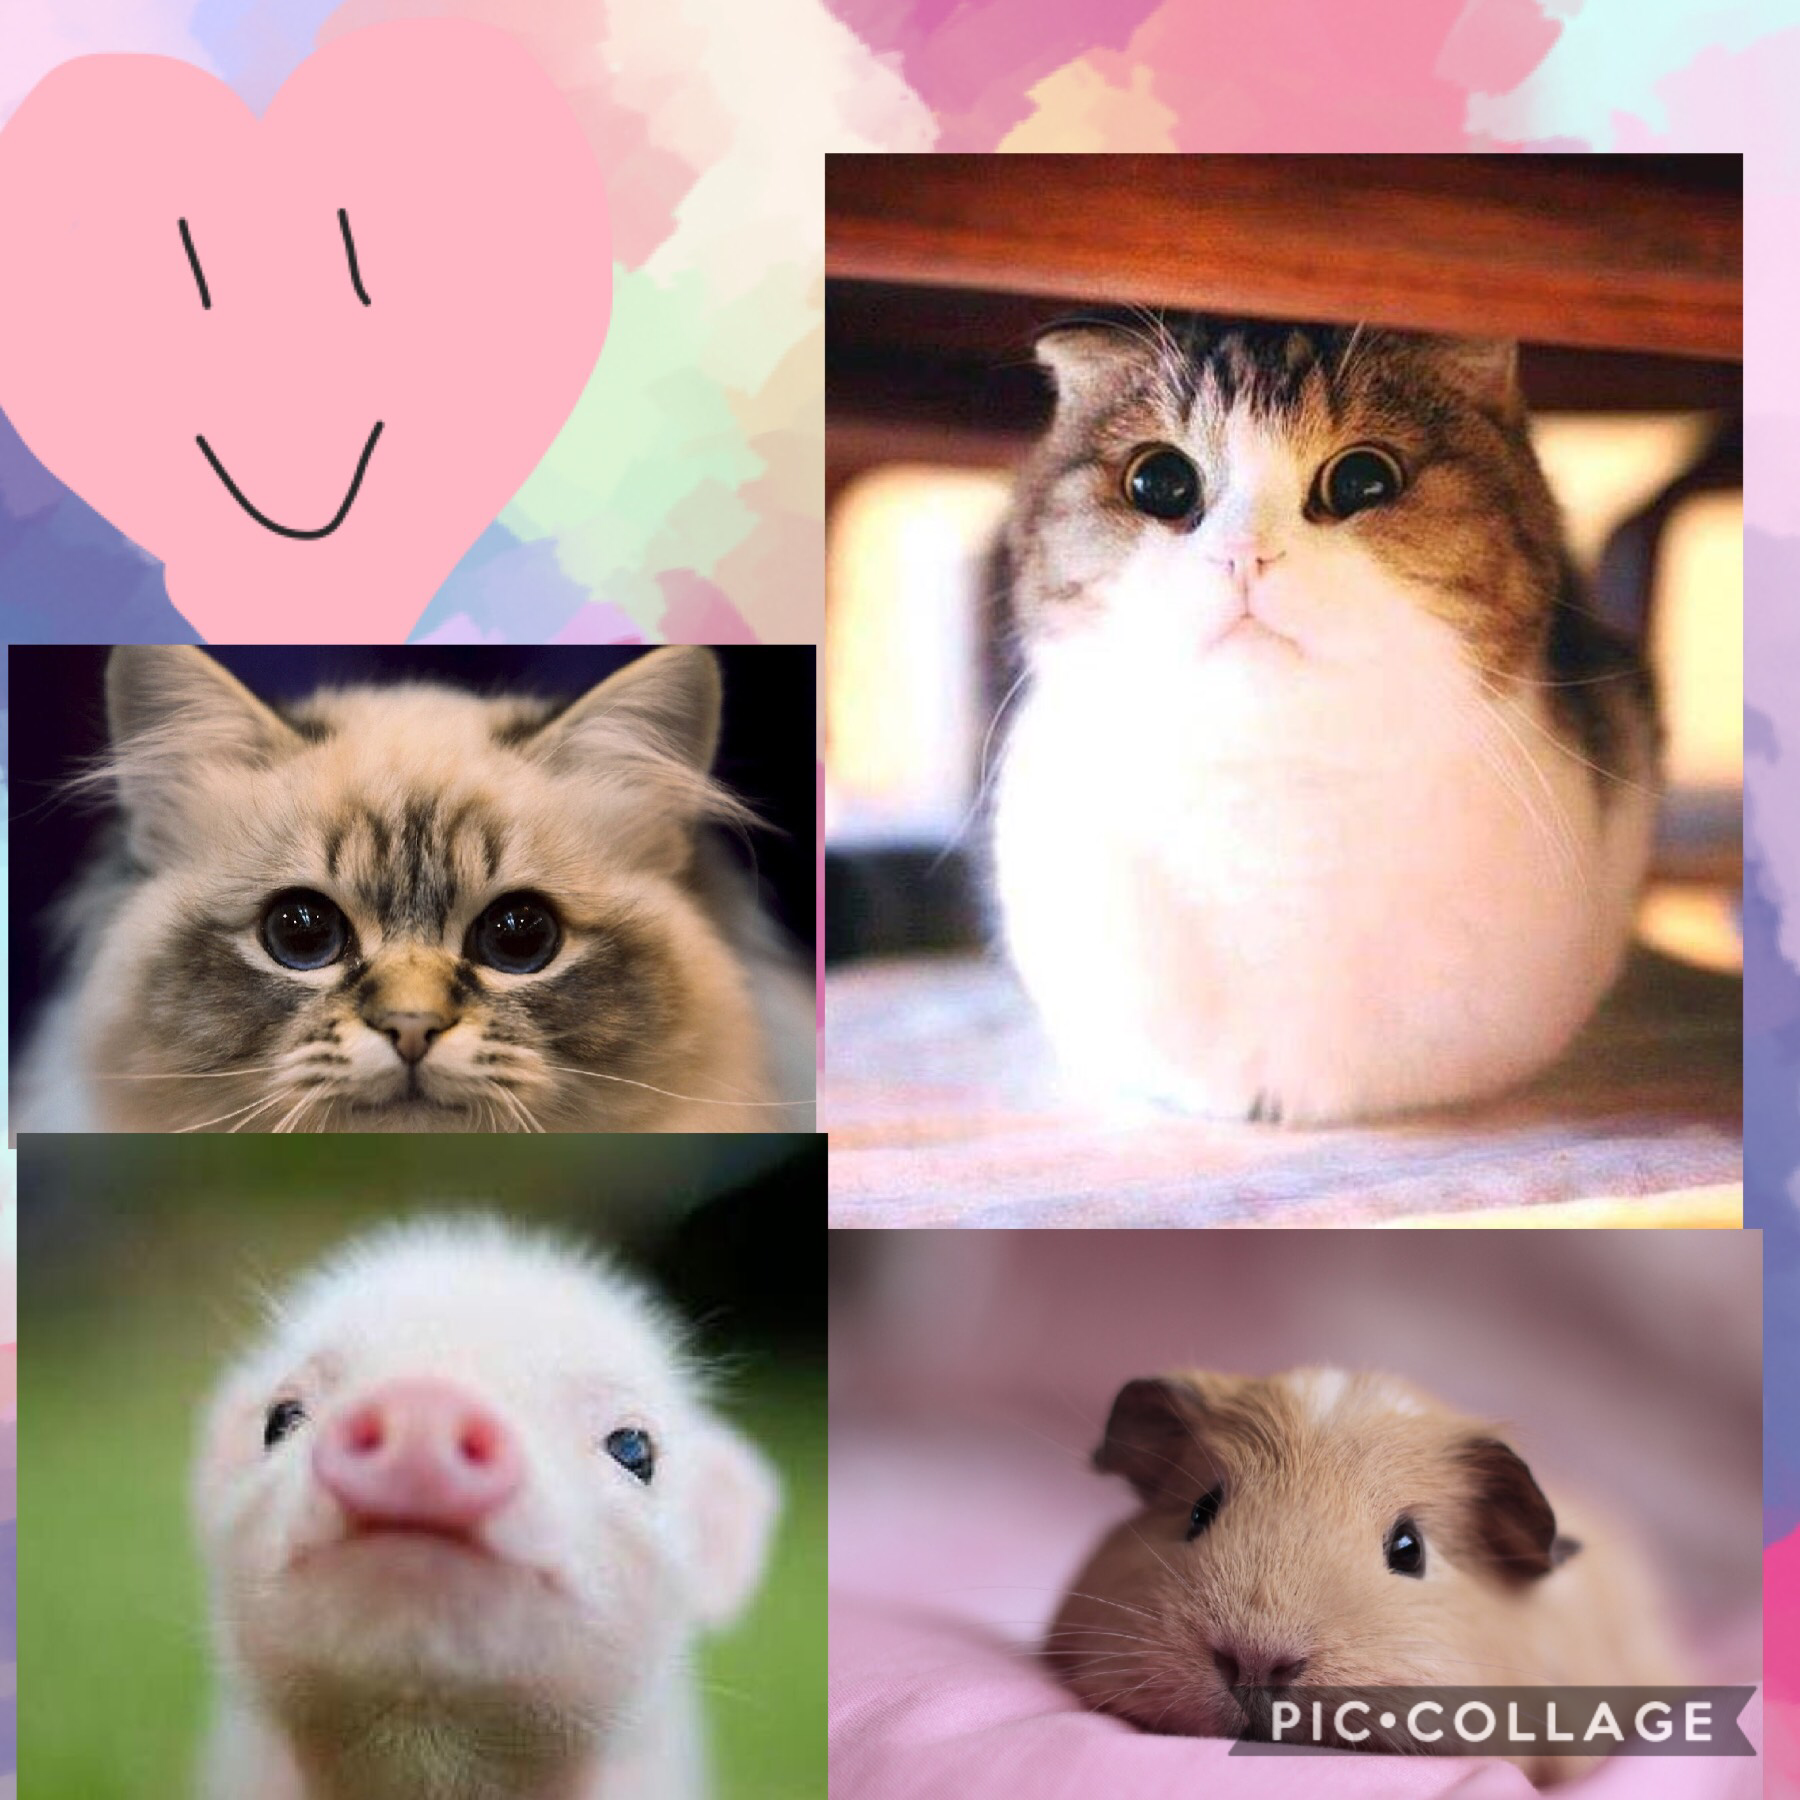 cats vs pigs vs ginny pigs 